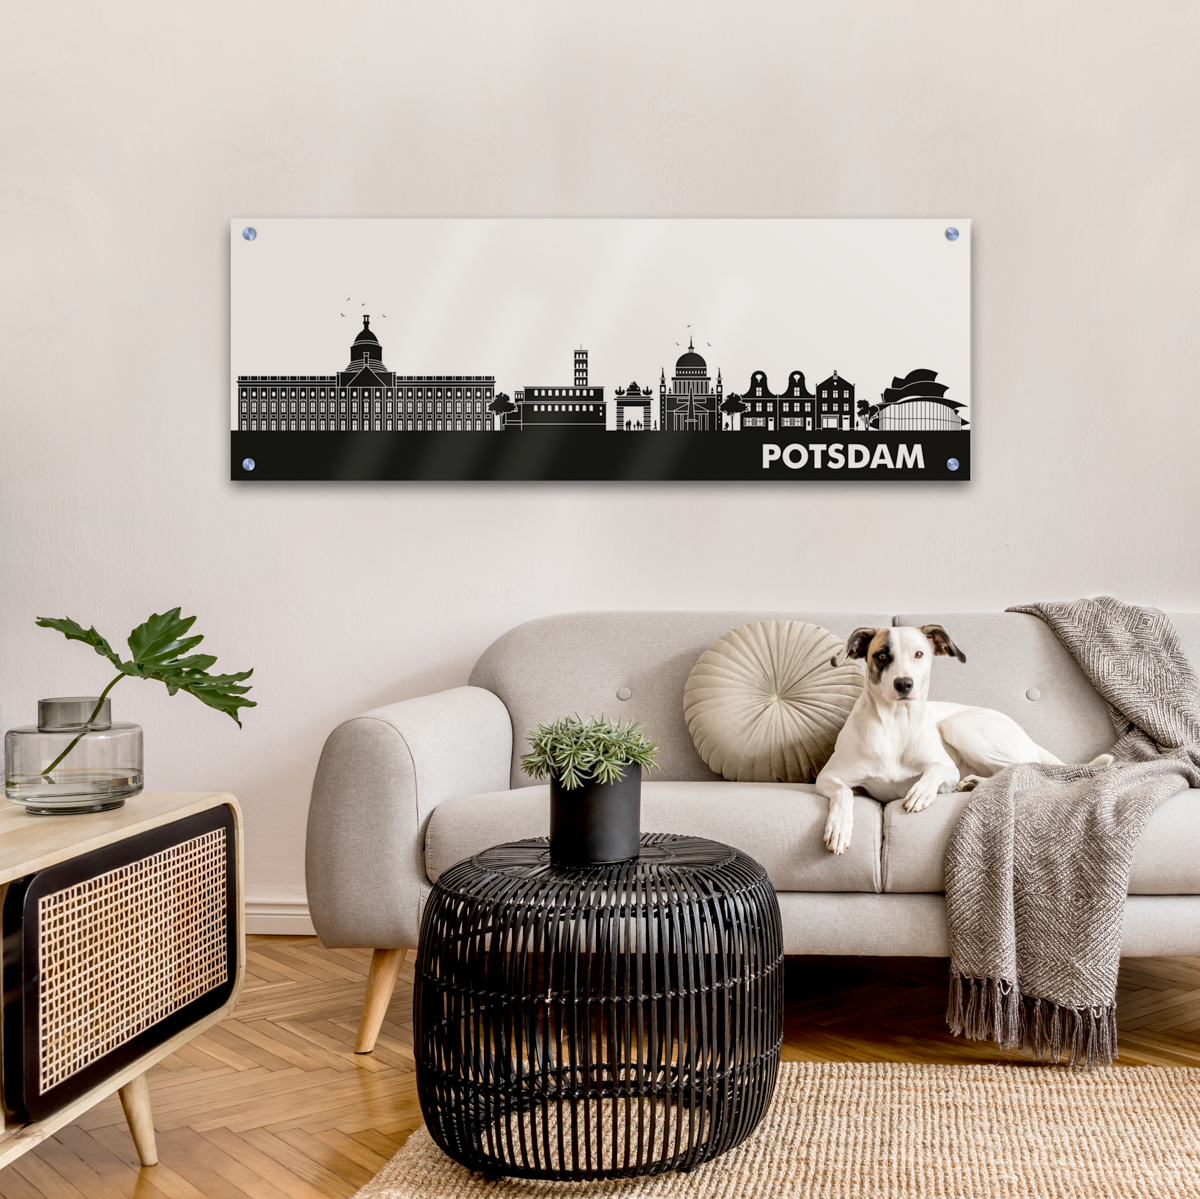 Skyline Potsdam  Acrylglas Wandbild - Silhouette                                                                                                                                    